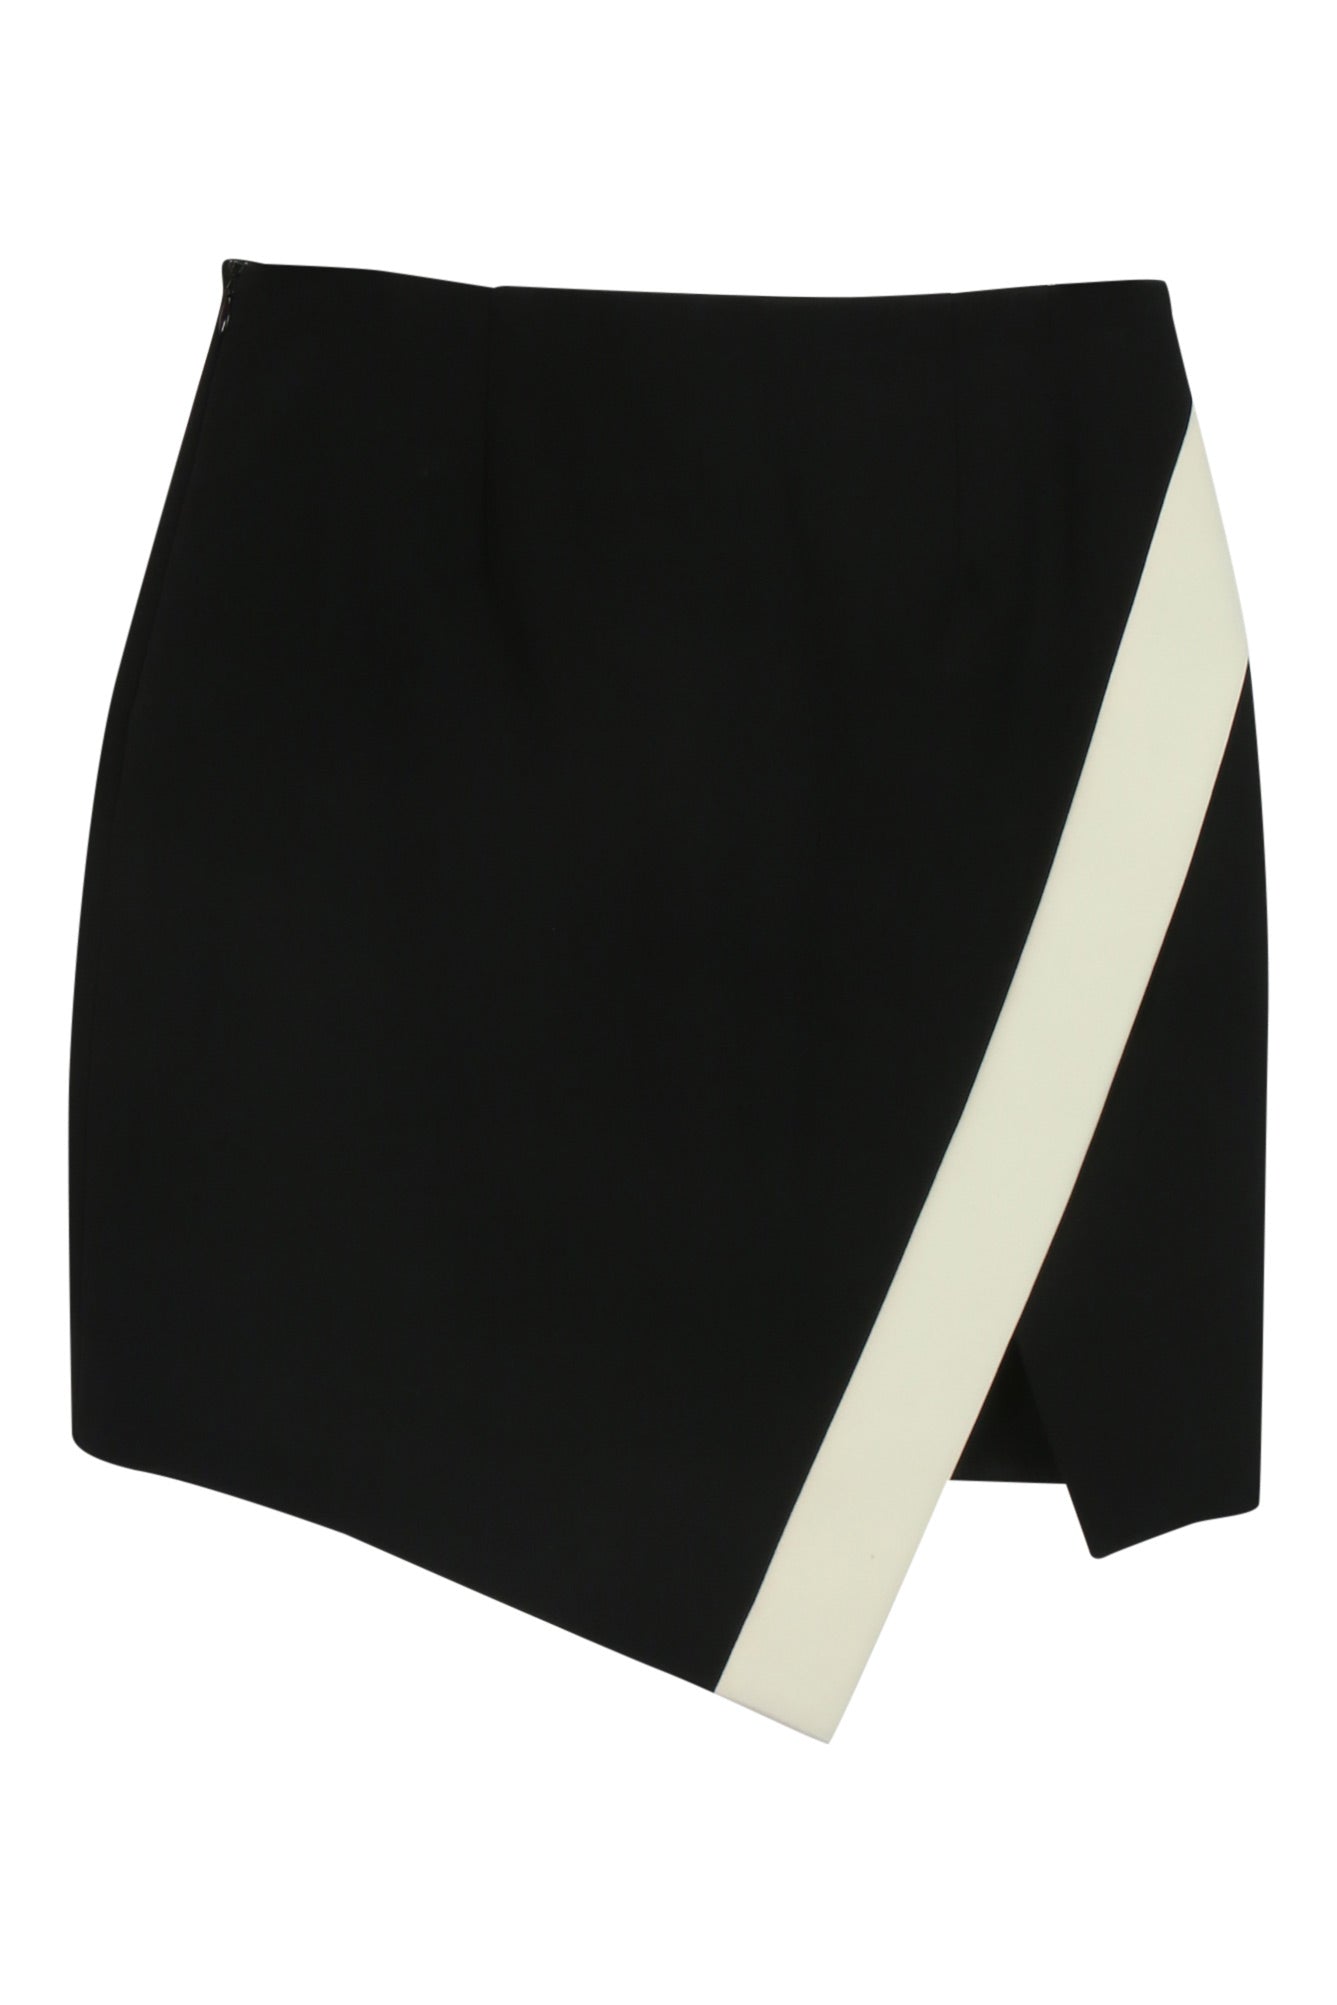 Black and white asymmetric skirt